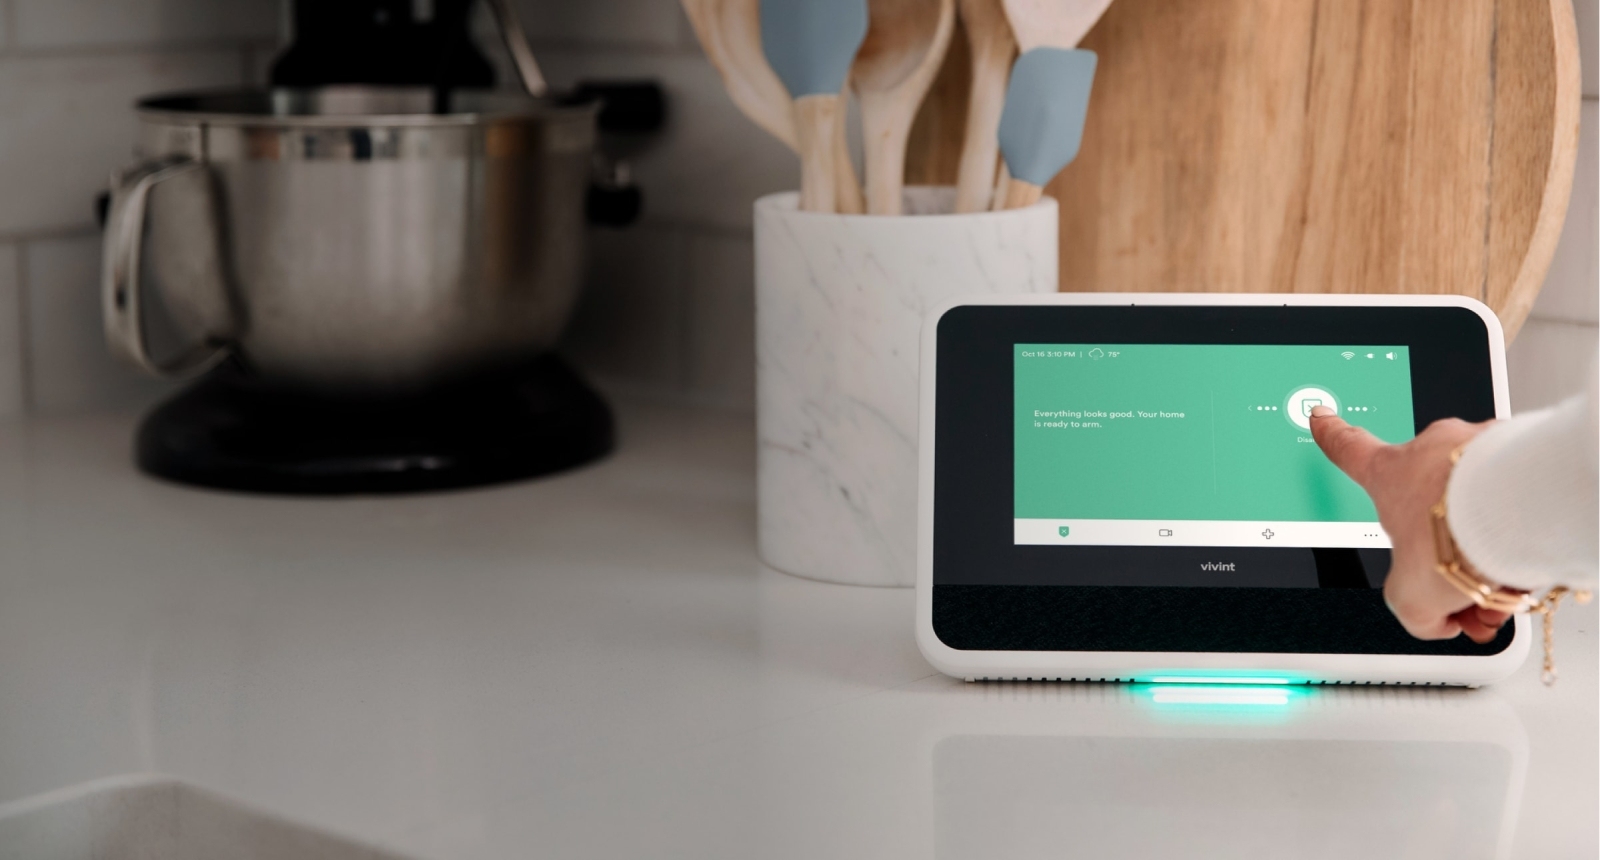 Vivint Smart Hub on the kitchen counter